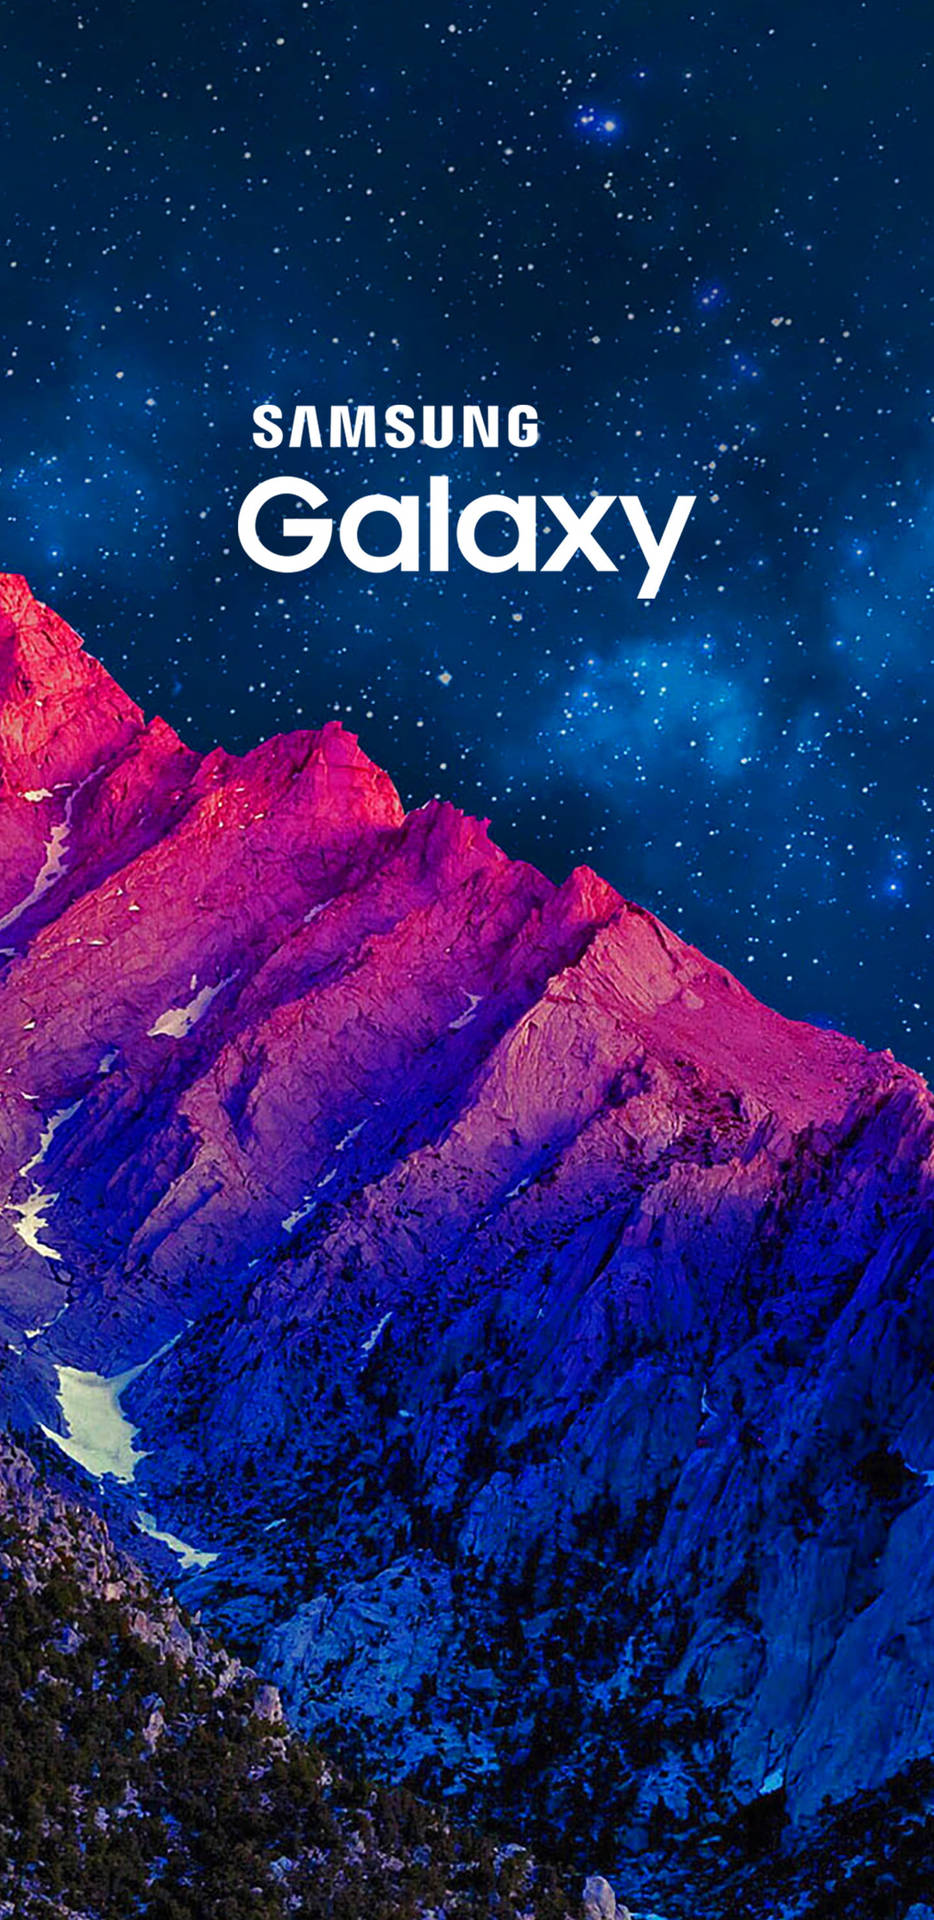 Free Samsung Full Hd Wallpaper Downloads, [100+] Samsung Full Hd Wallpapers  for FREE 